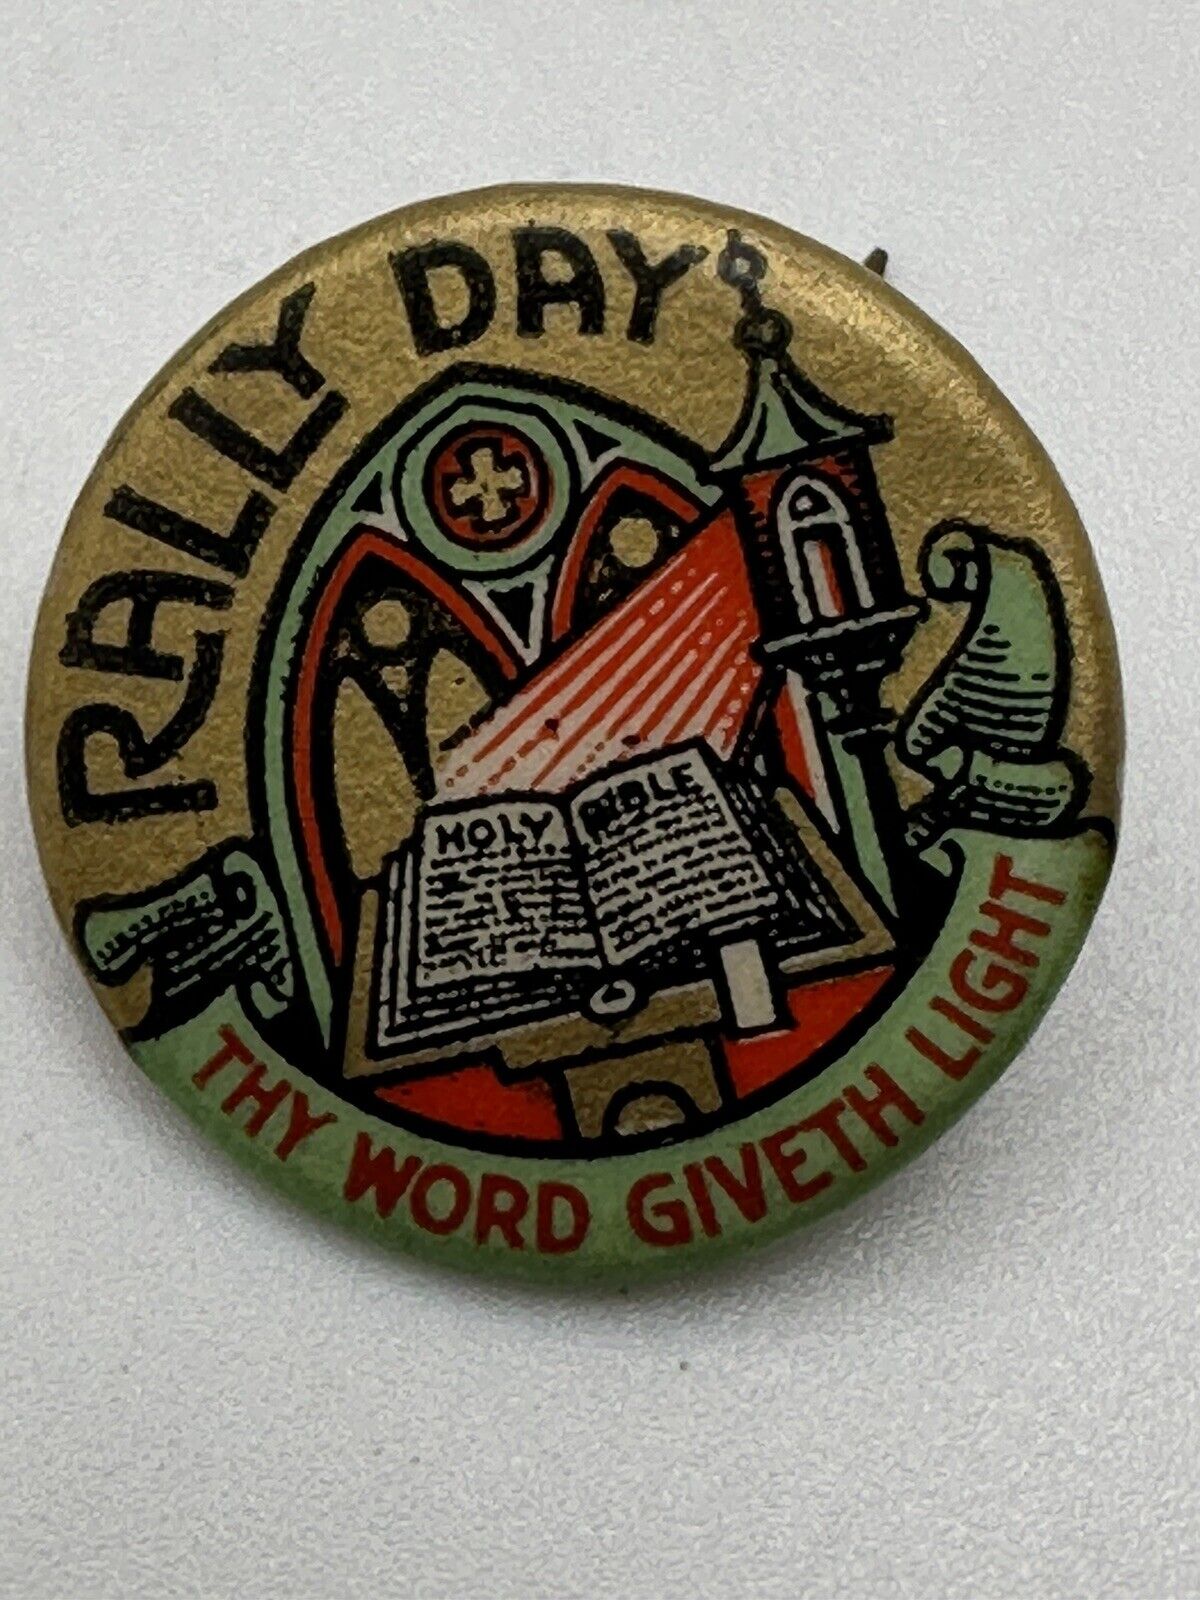 Antique Sunday School Church Rally Day Pin Thy Word Giveth Light